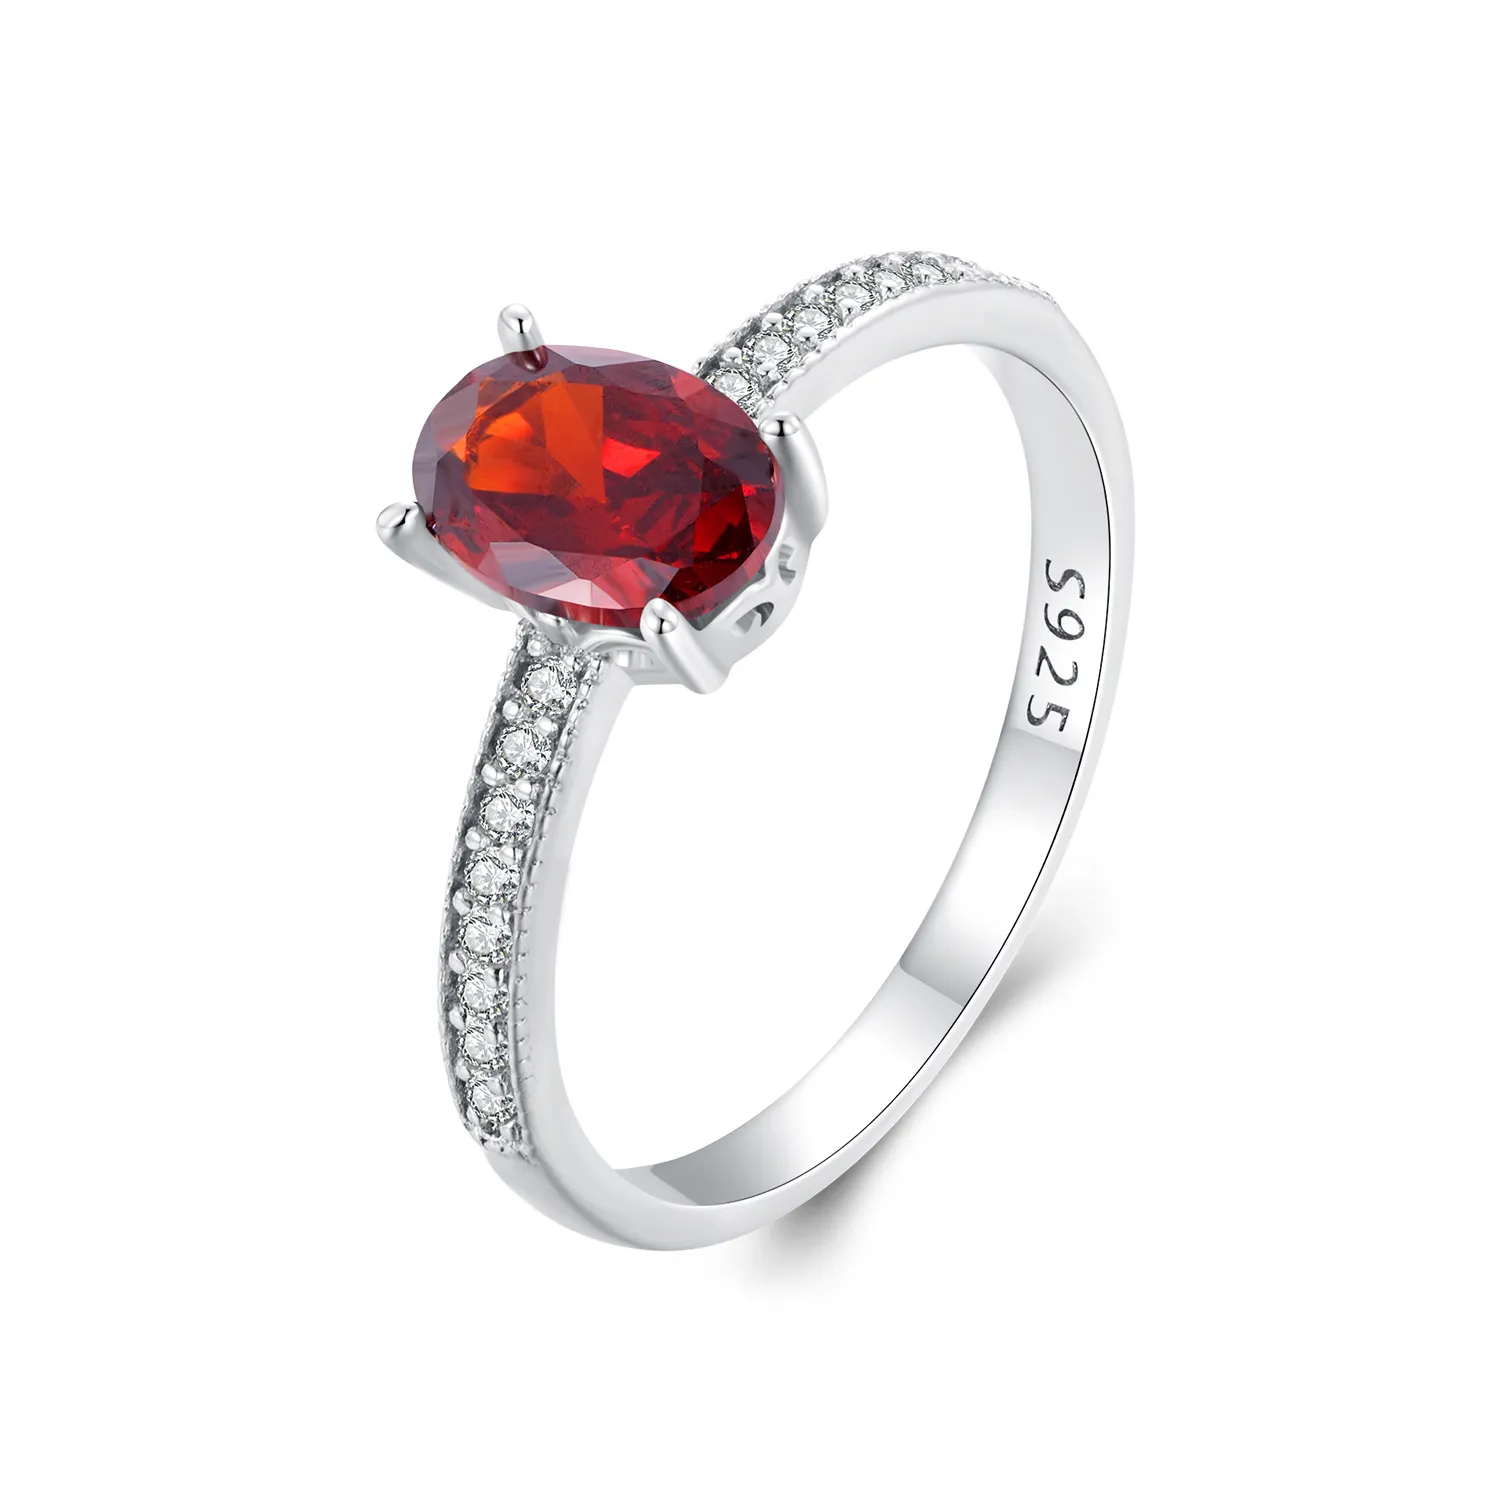 Inel roșu în stil Pandora - BSR460-RD